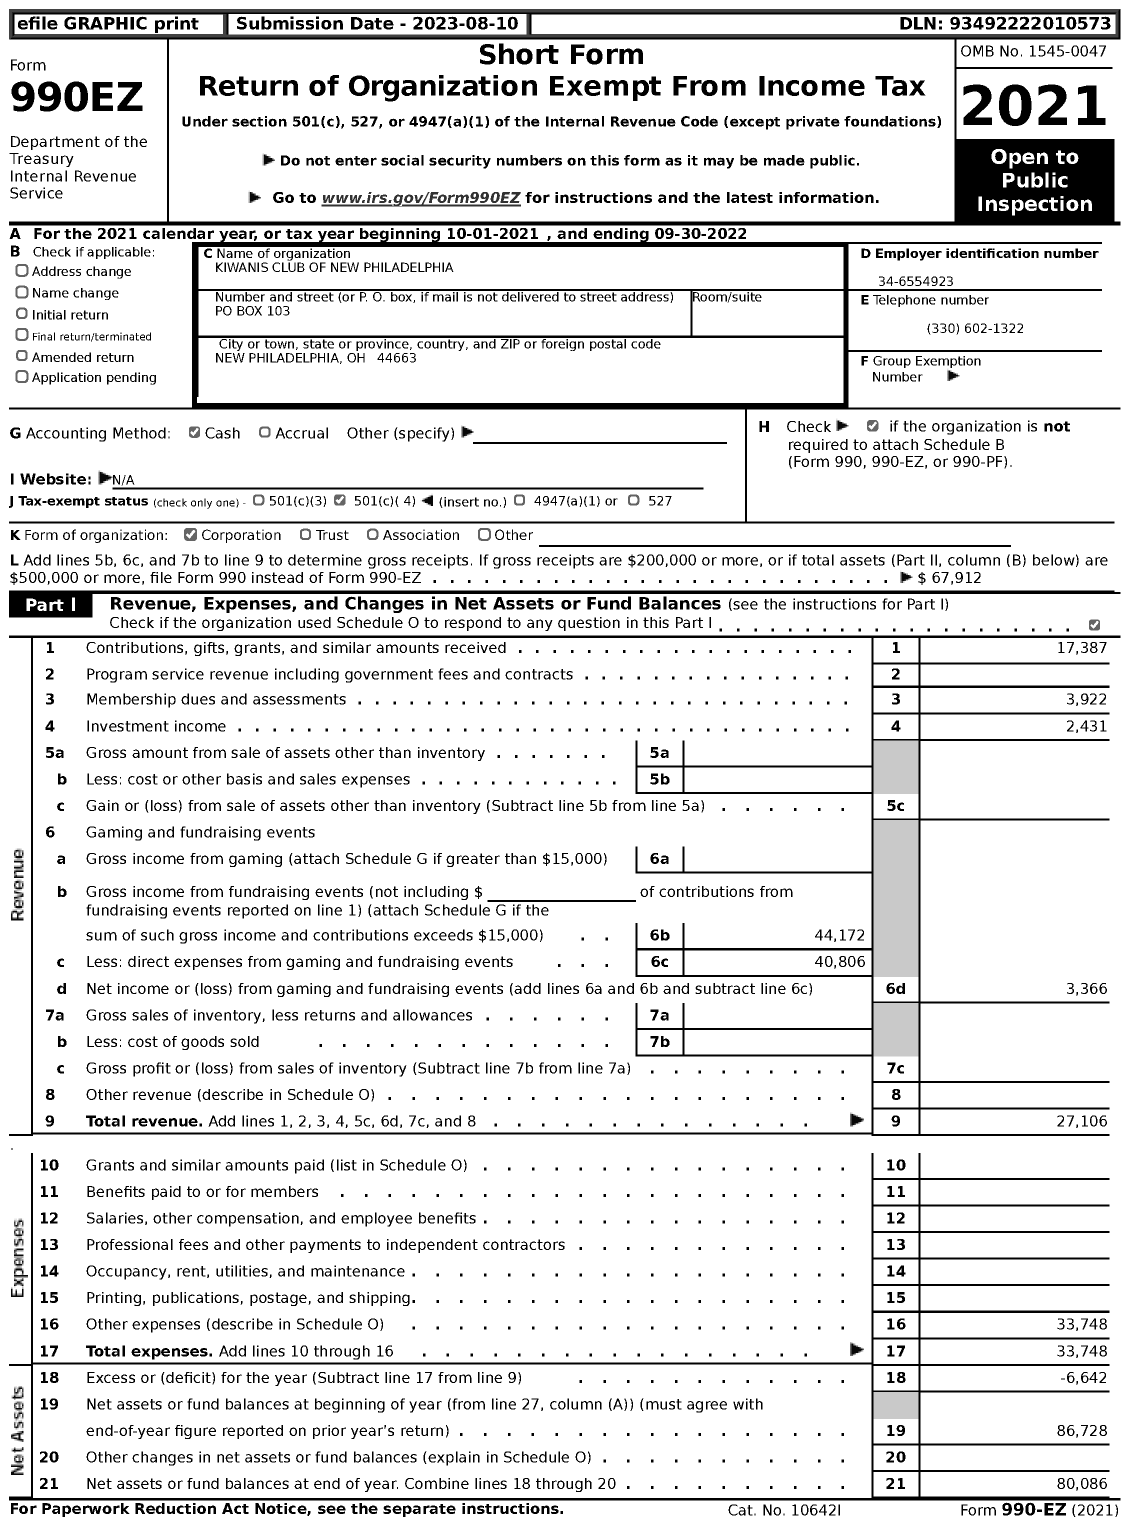 Image of first page of 2021 Form 990EZ for Kiwanis International - K00393 New Philadelphia